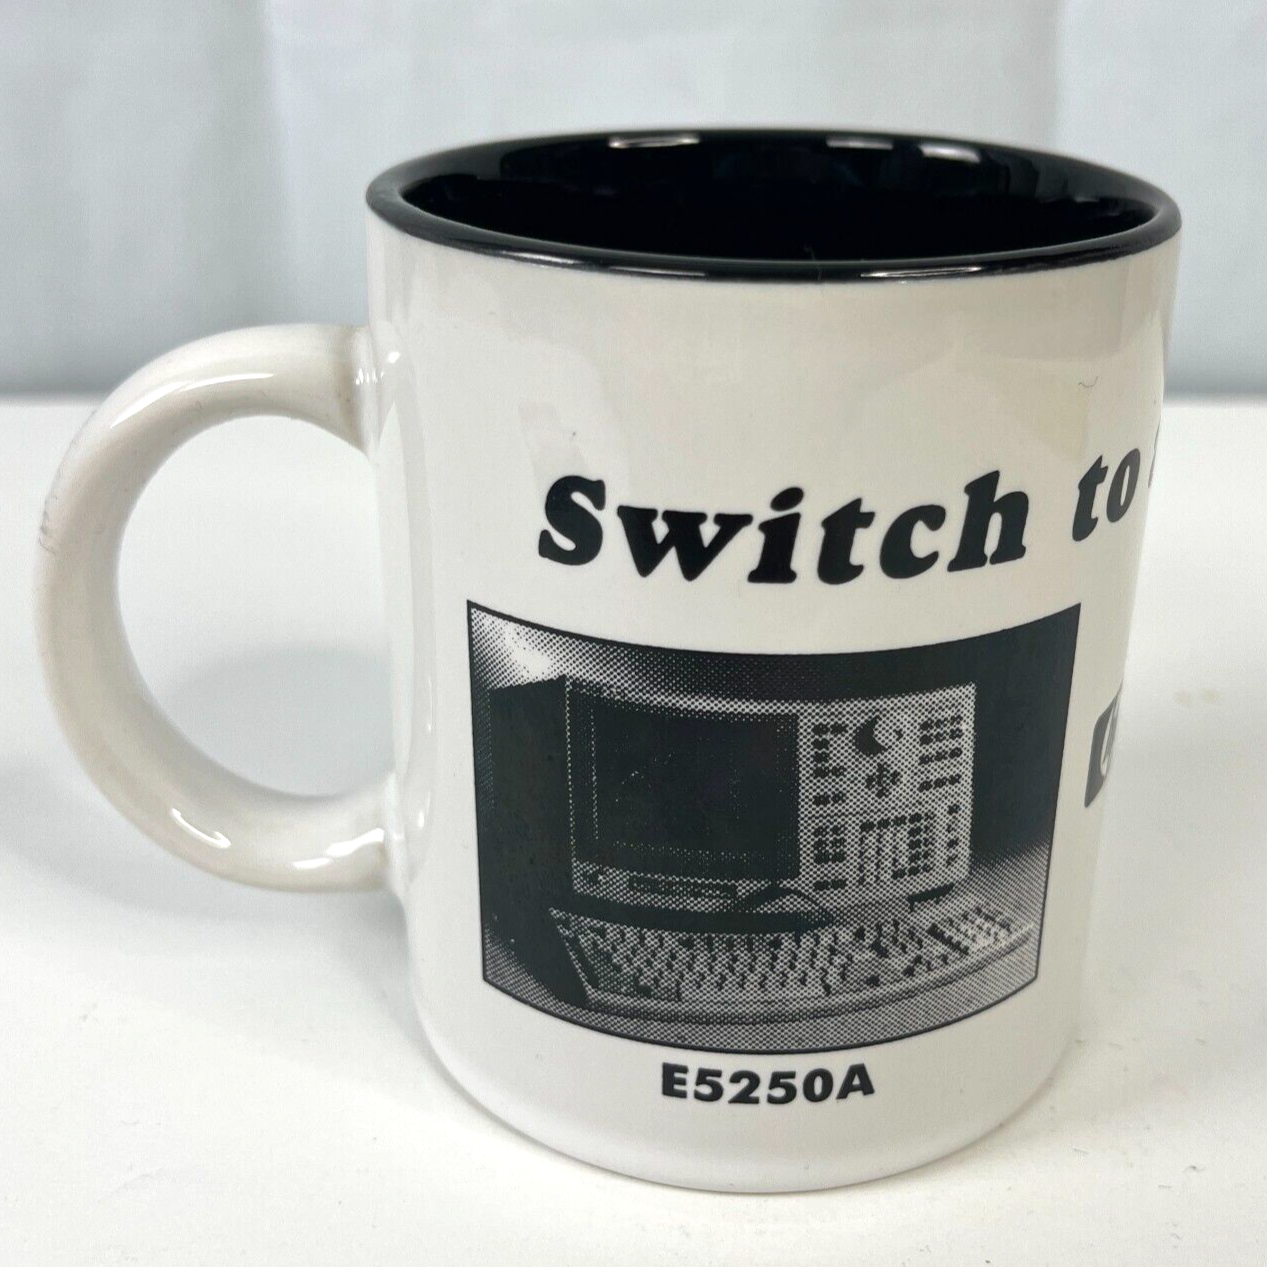 Hewlett Packard E5250A 4156A Computer Switch To Total Solution Retro Coffee Mug - $43.32